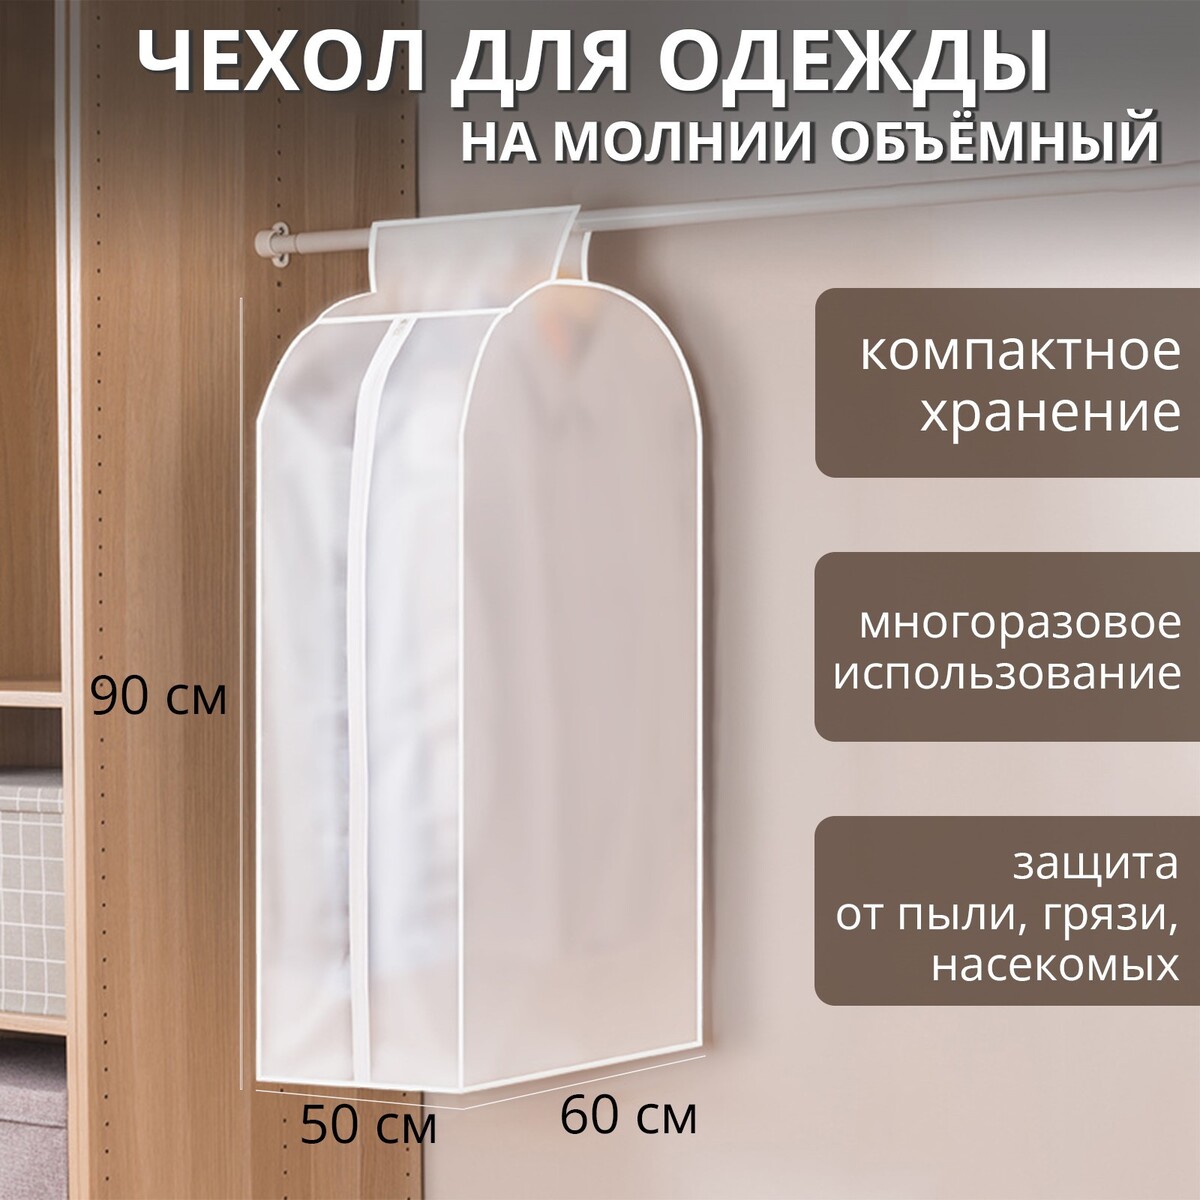 Чехол для одежды плотный доляна, 60×90×30 см, peva, цвет белый чехол для одежды ladо́m 60×137 см плотный peva серый